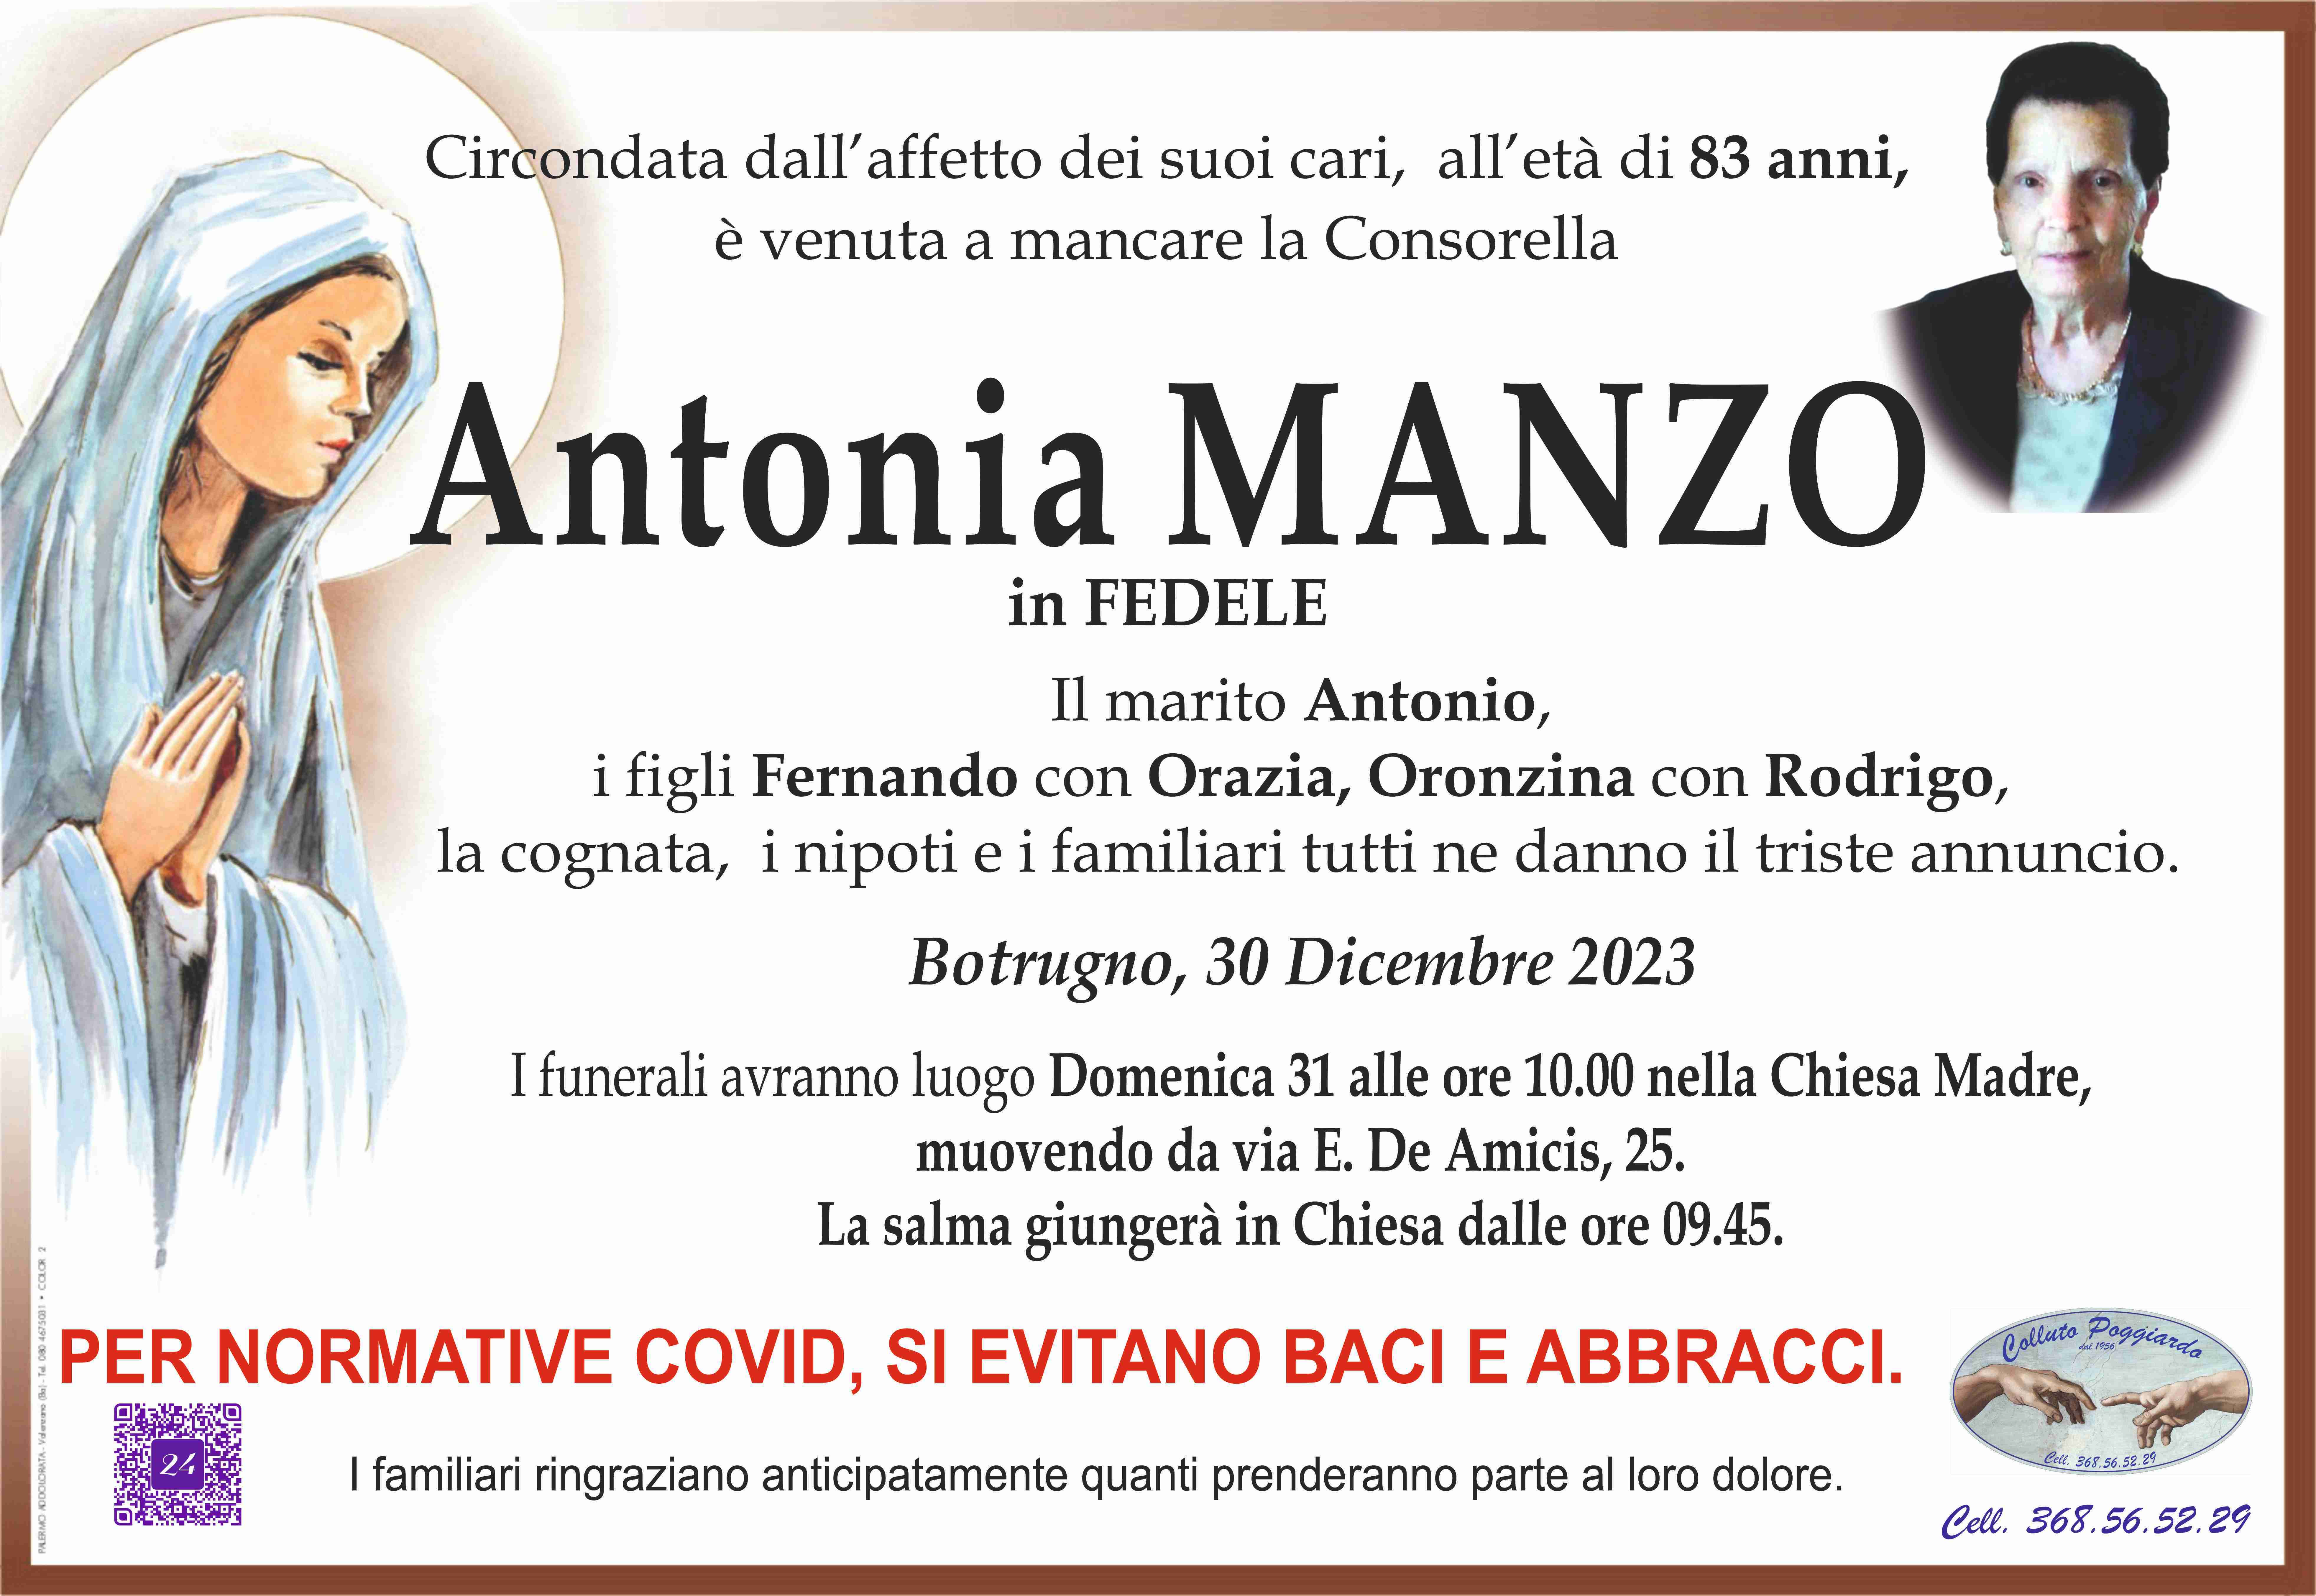 Antonia Manzo